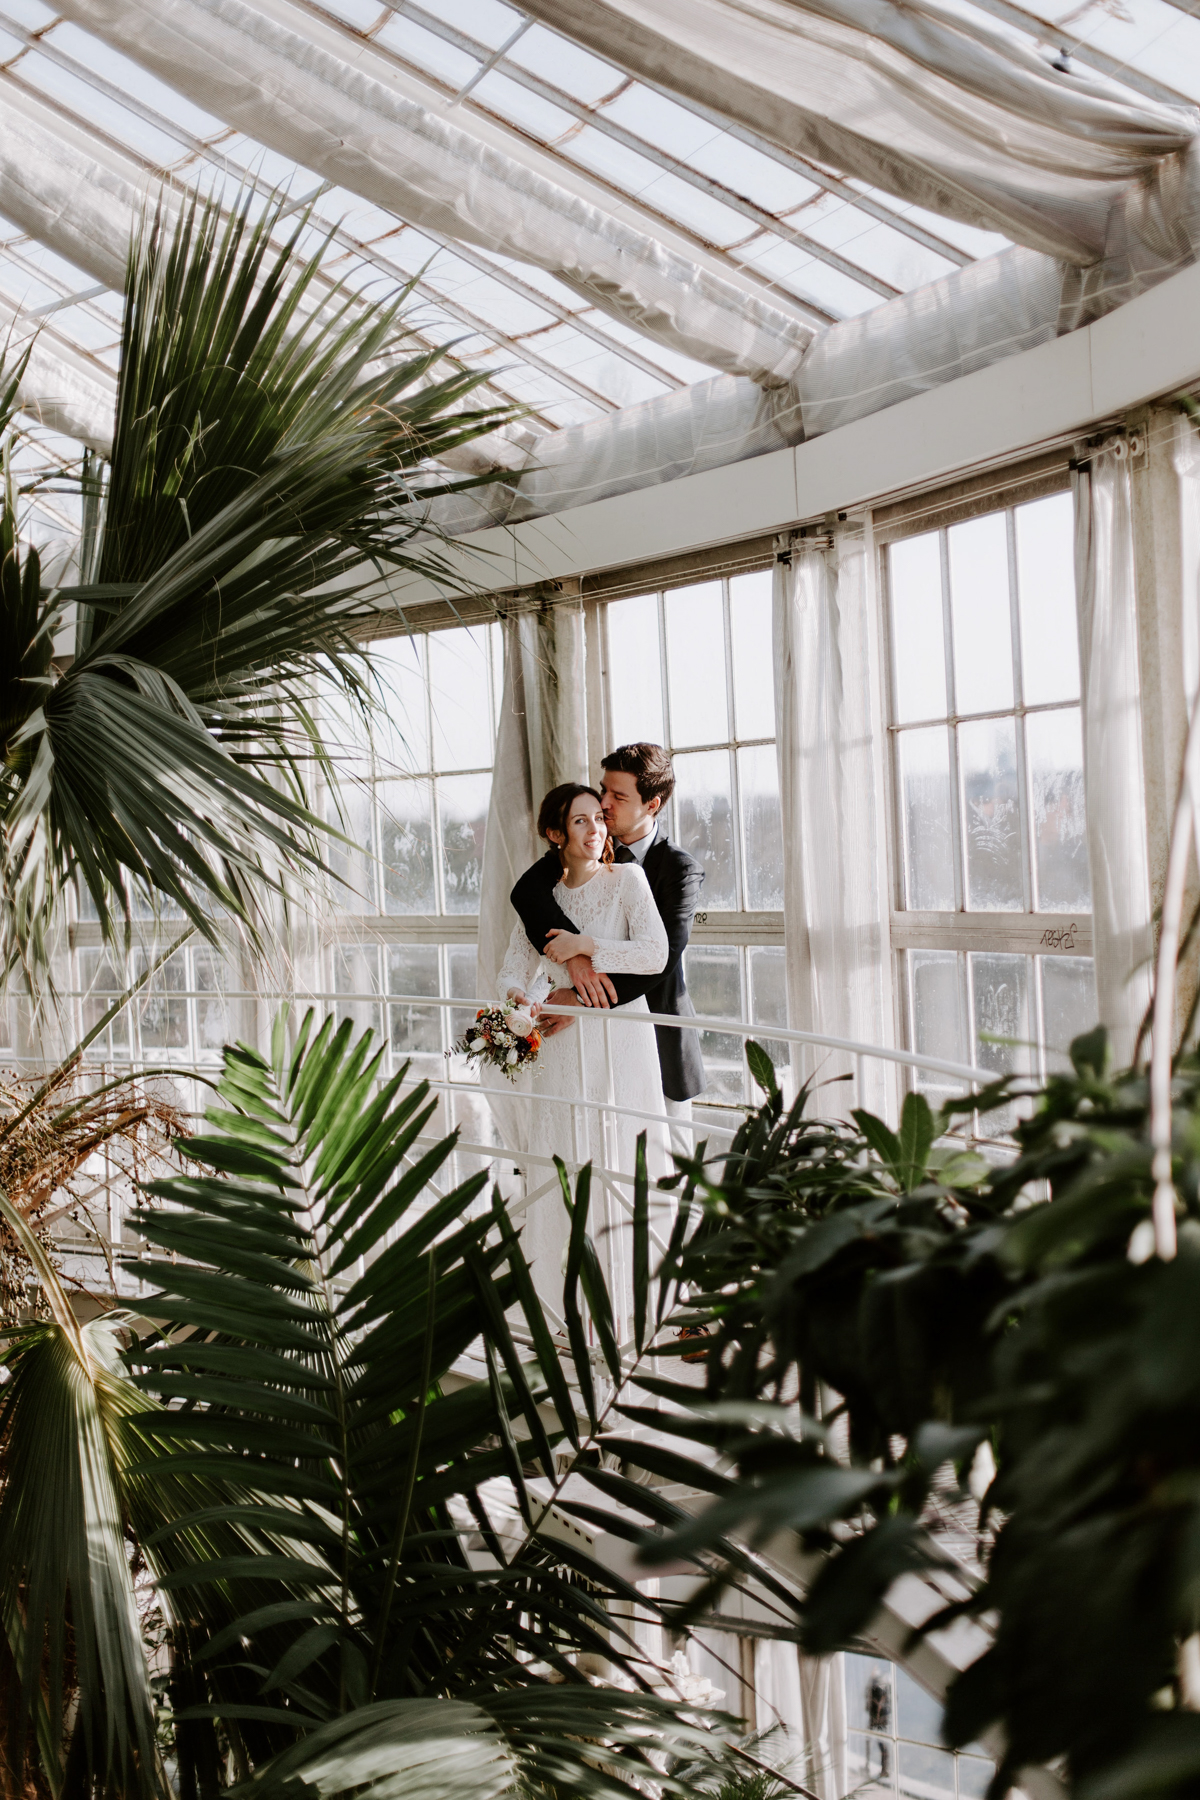 Our Dreamy Copenhagen Elopement ~ Botanical Gardens, City Hall Wedding Photographer, Elva Ziemele / Lace Ivy and Oak Wedding Dress, Denmark / RG Daily Blog, Rebecca Goddard